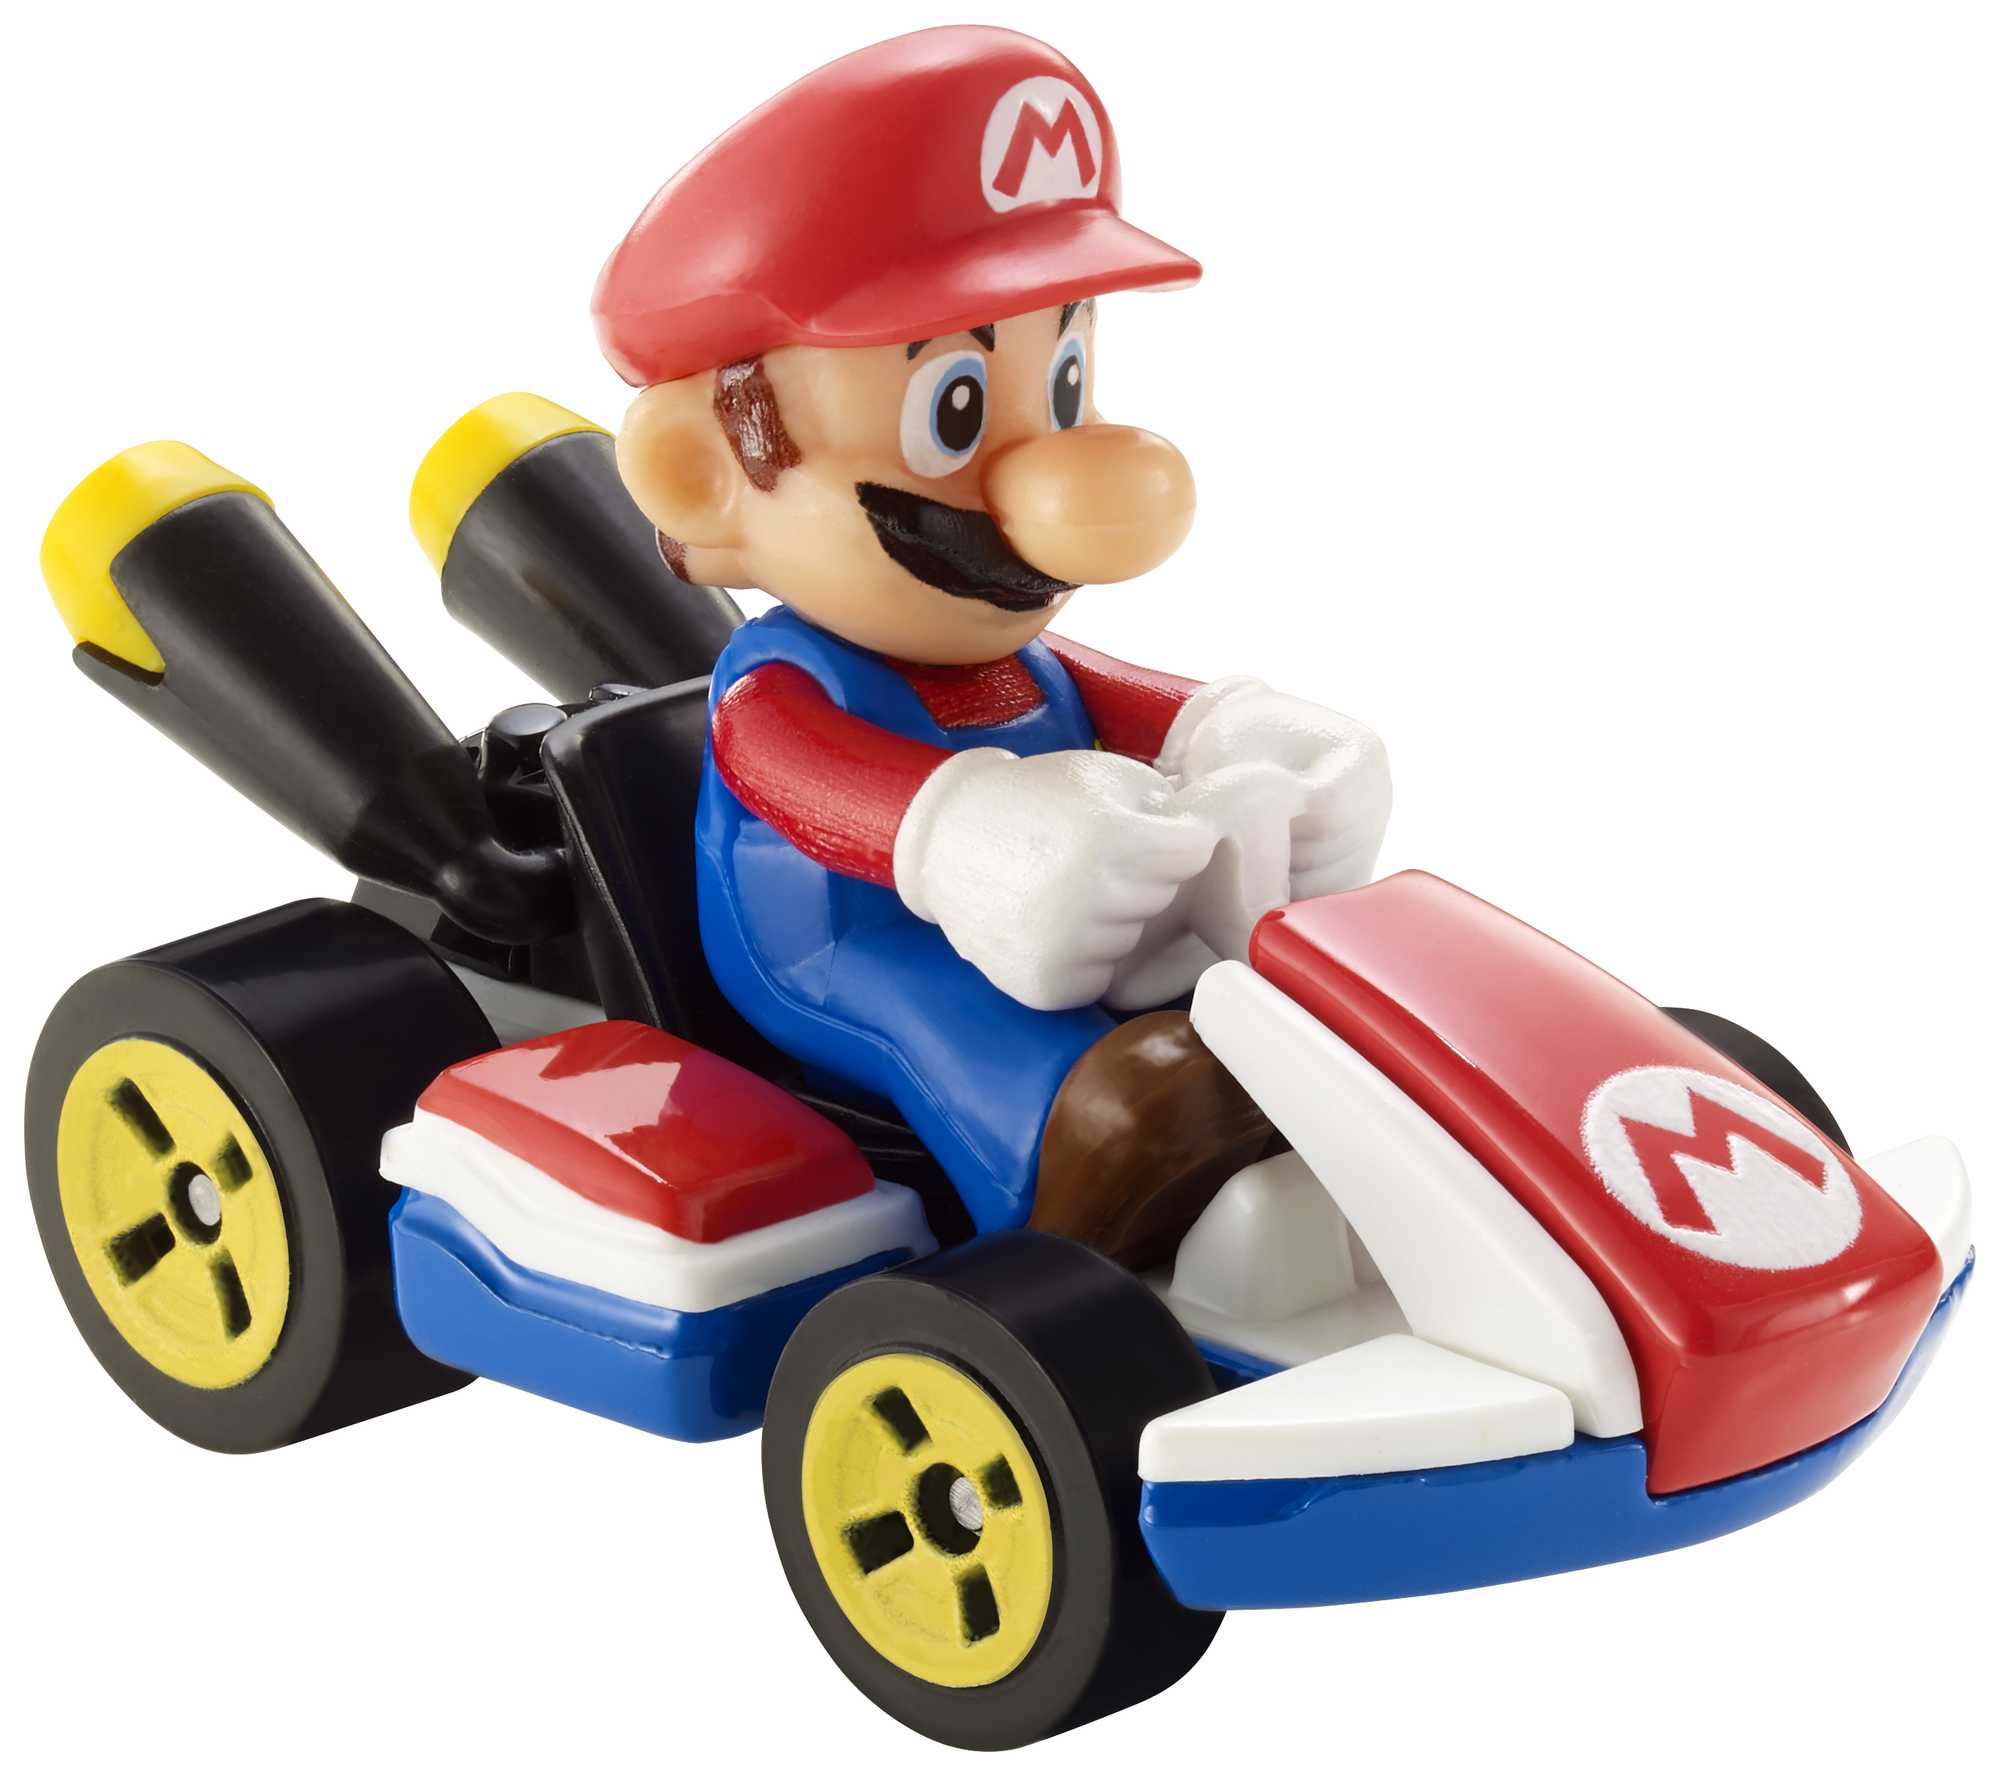 Hot Wheels Mario Kart Mario, Standard Kart Vehicle, GBG26